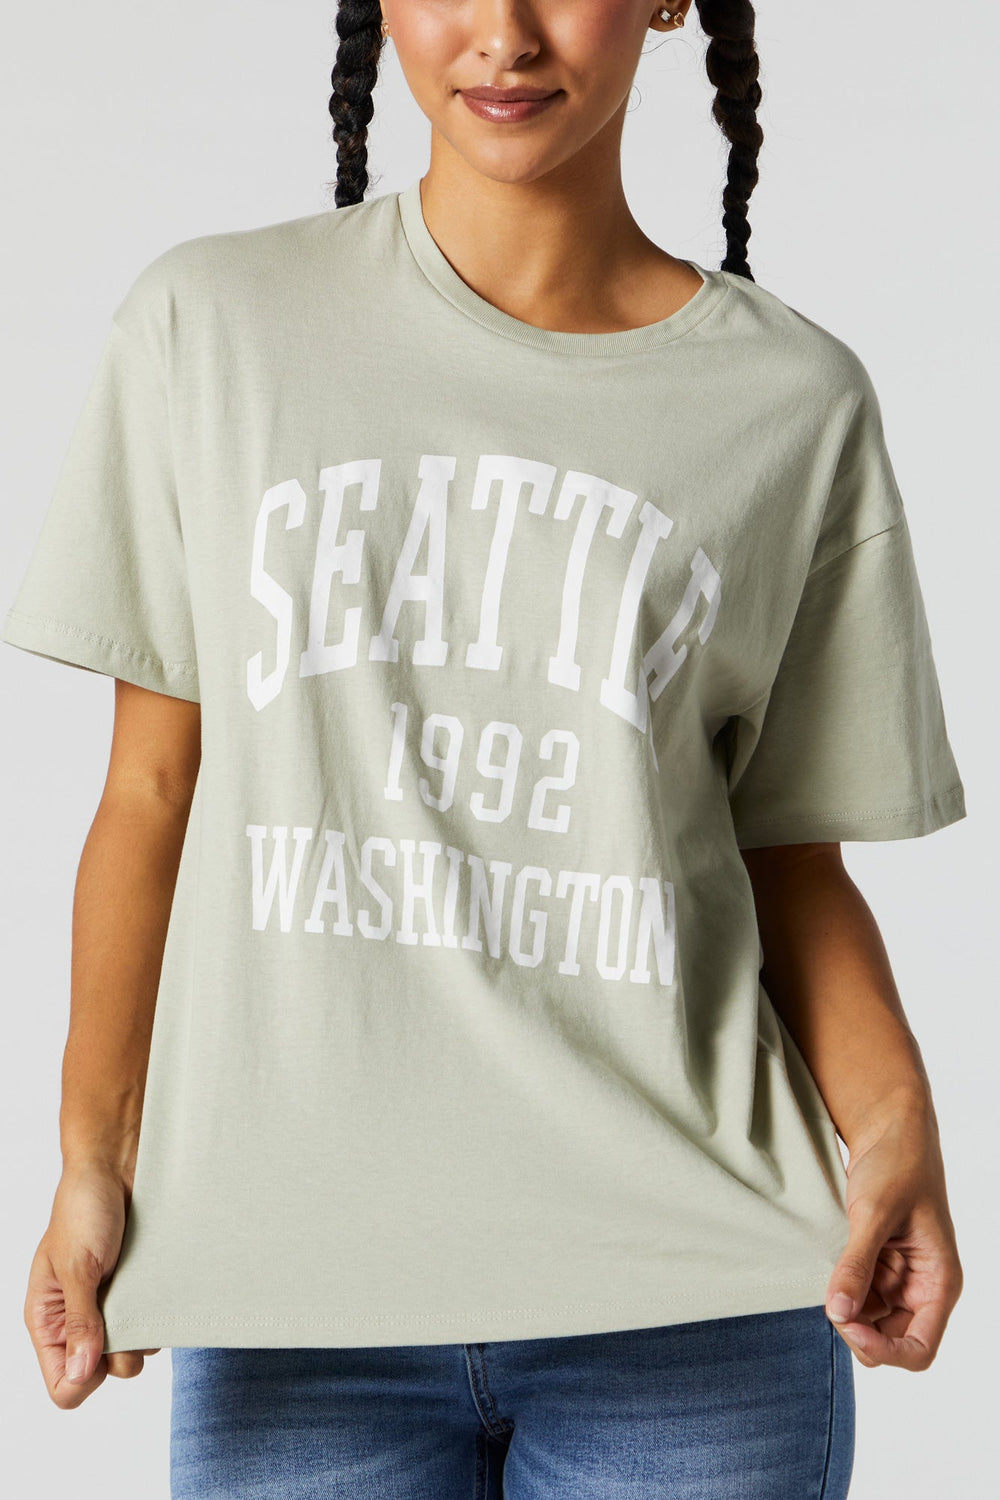 Seattle Graphic Boyfriend T-Shirt Seattle Graphic Boyfriend T-Shirt 1